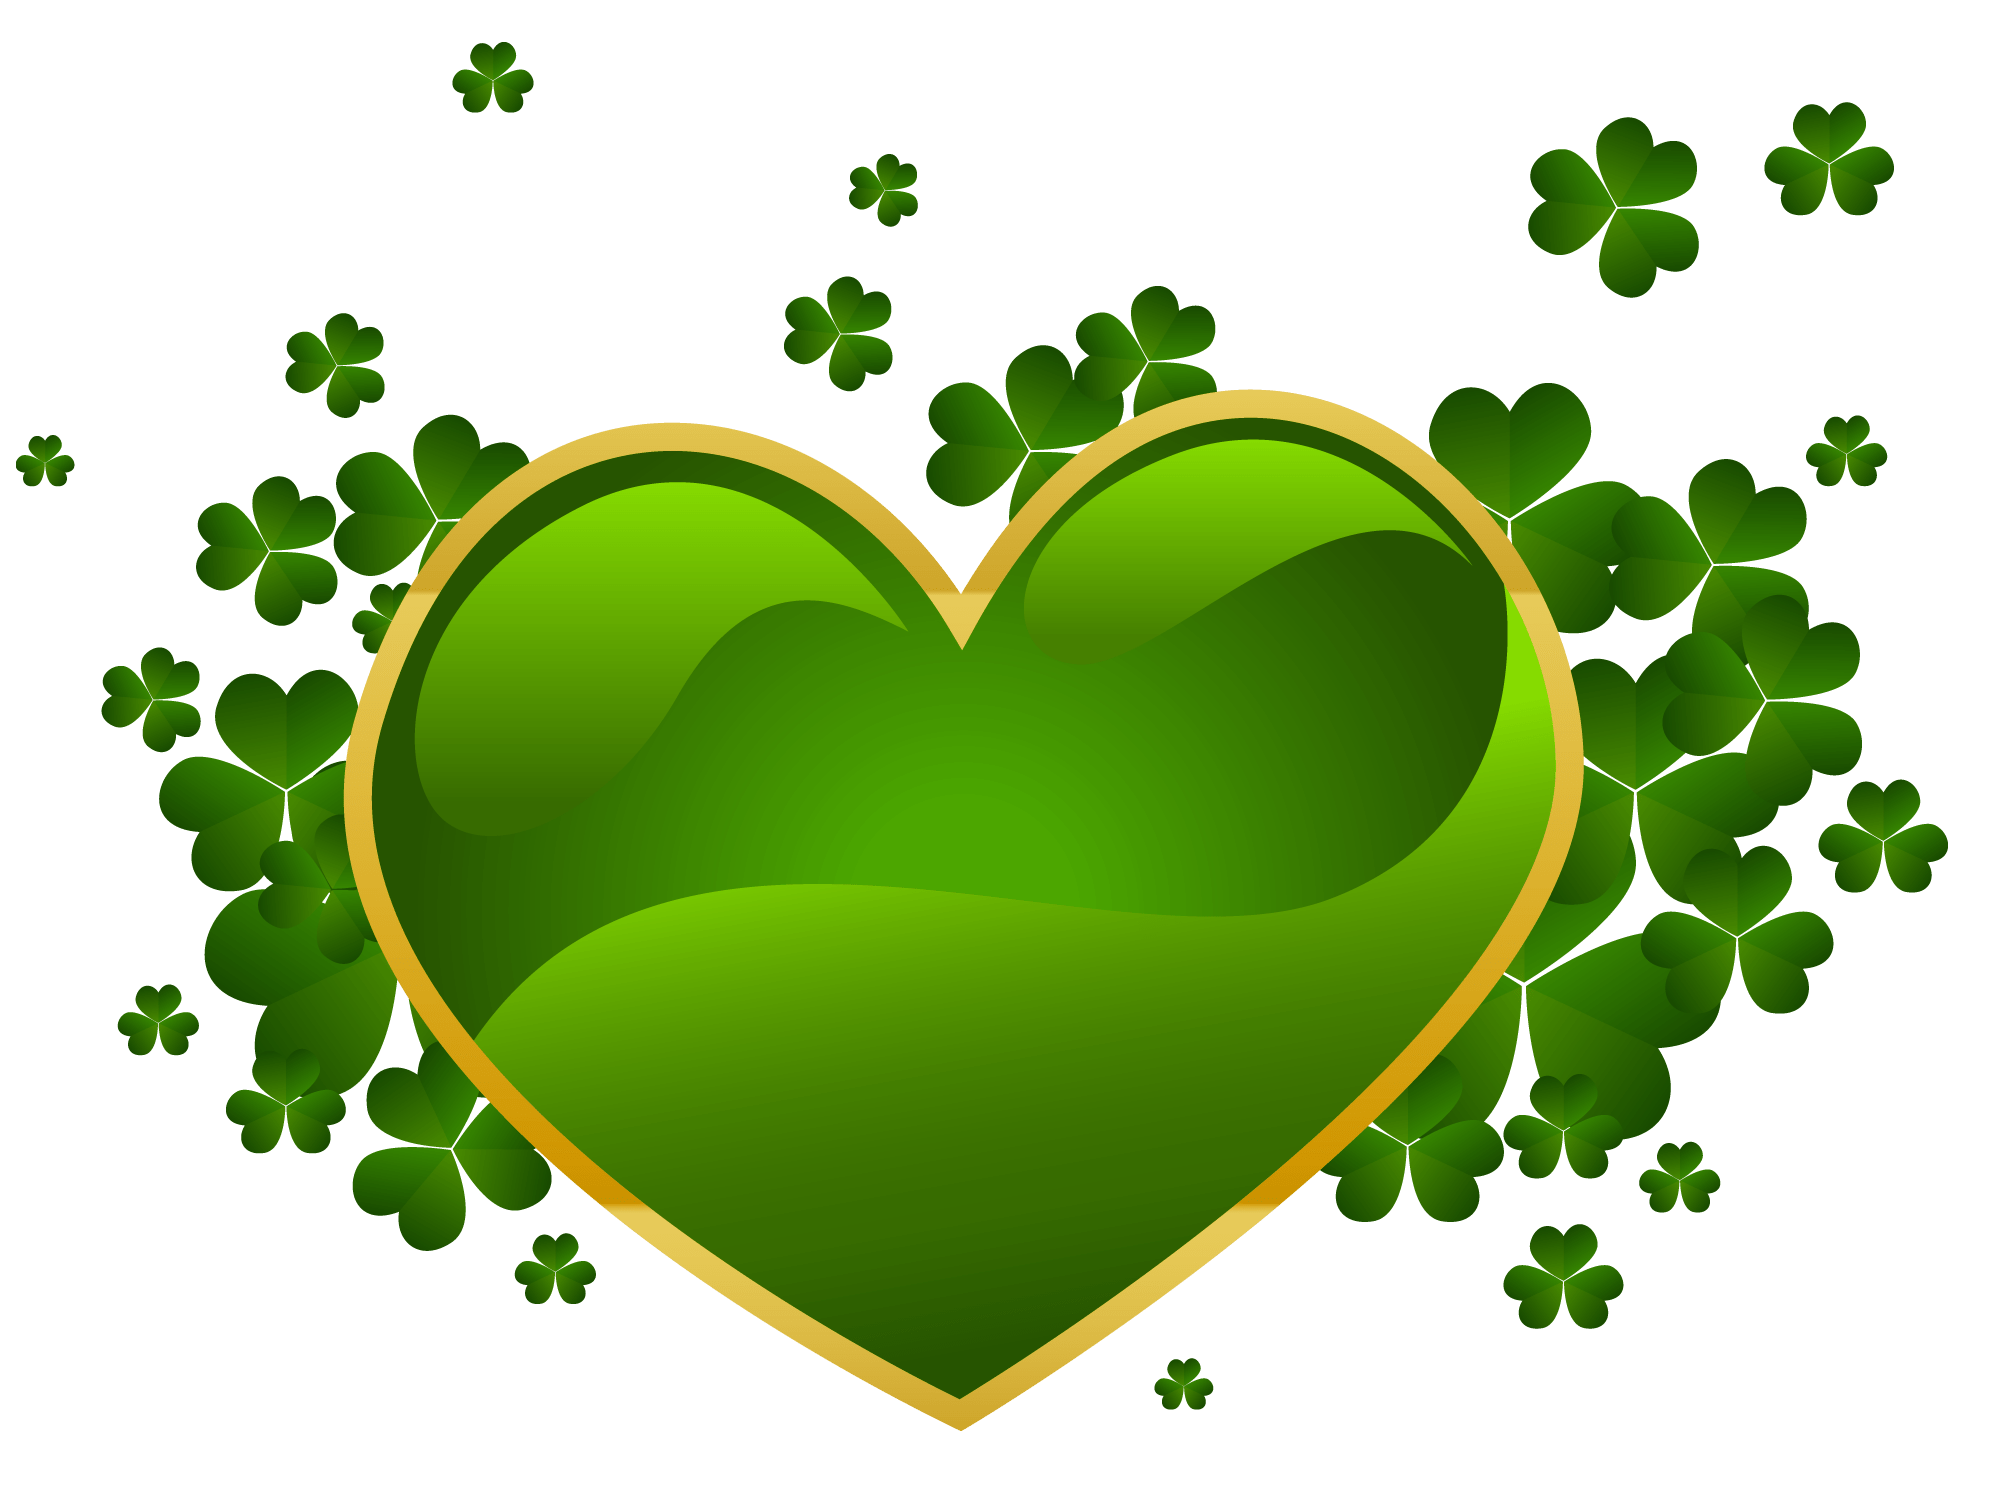 Happy St Patrick's Day Green Heart SVG Clip arts